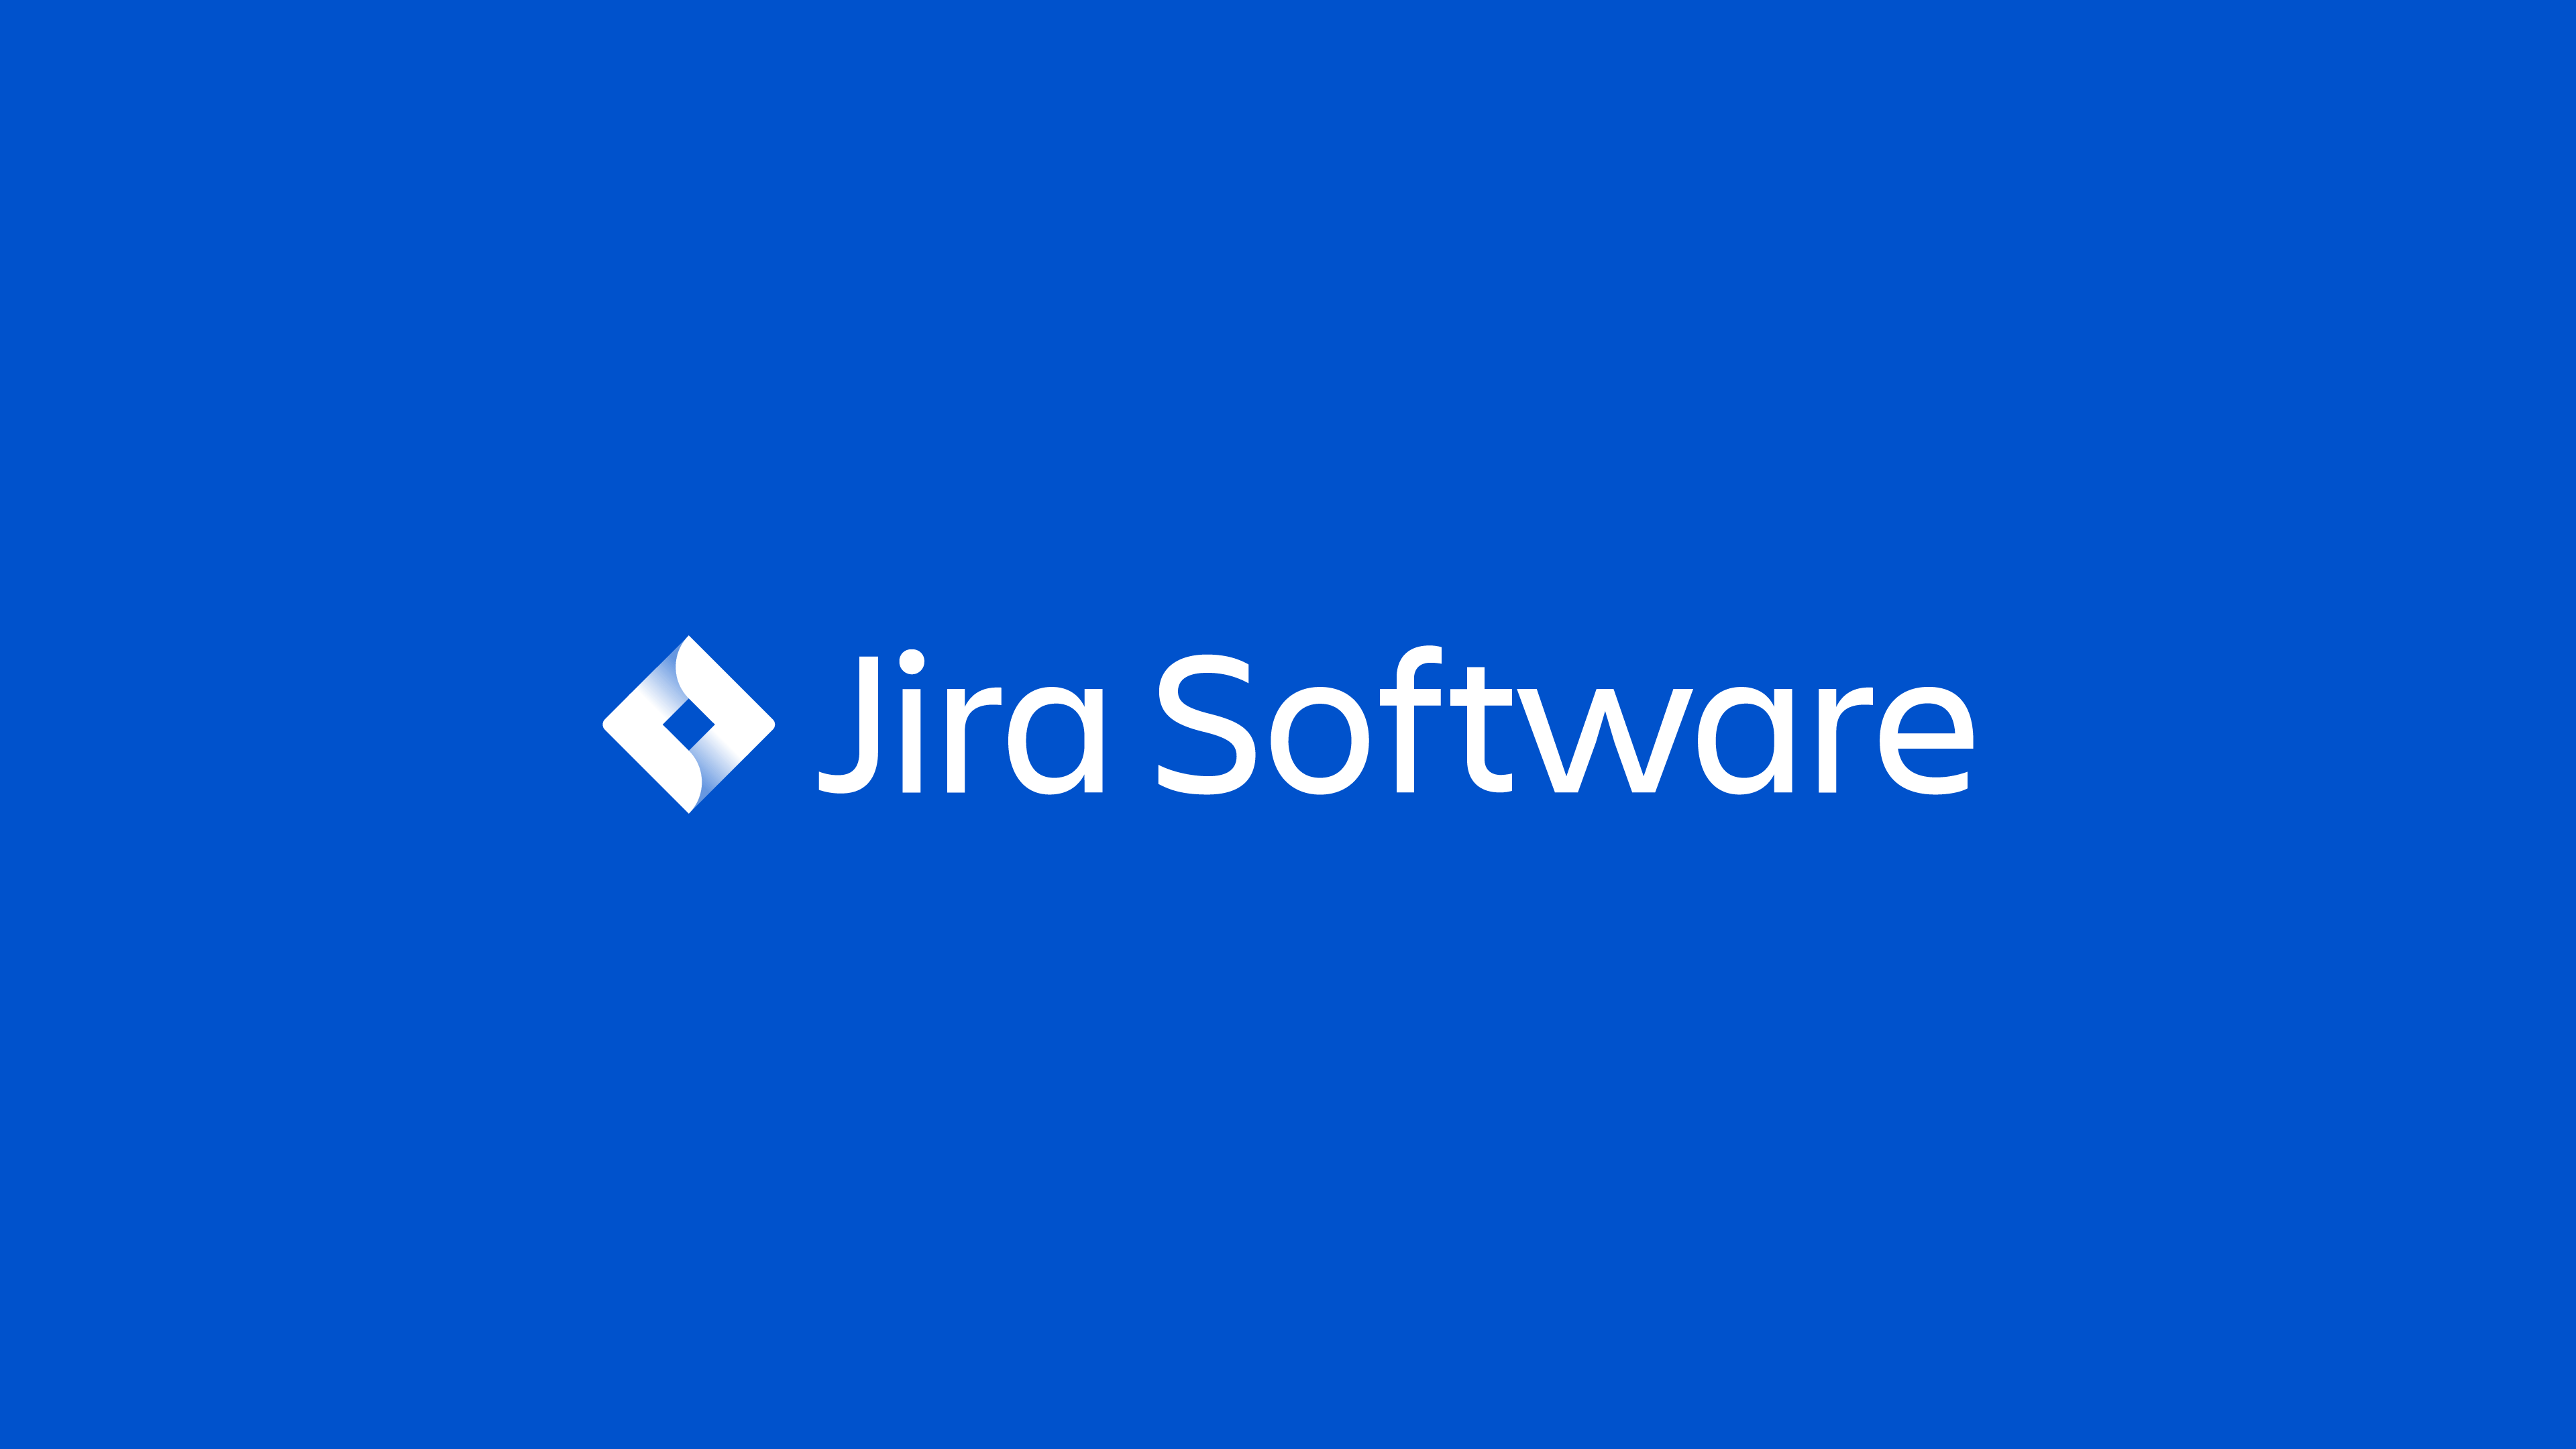 JIRA Logo - Logos - Atlassian Design